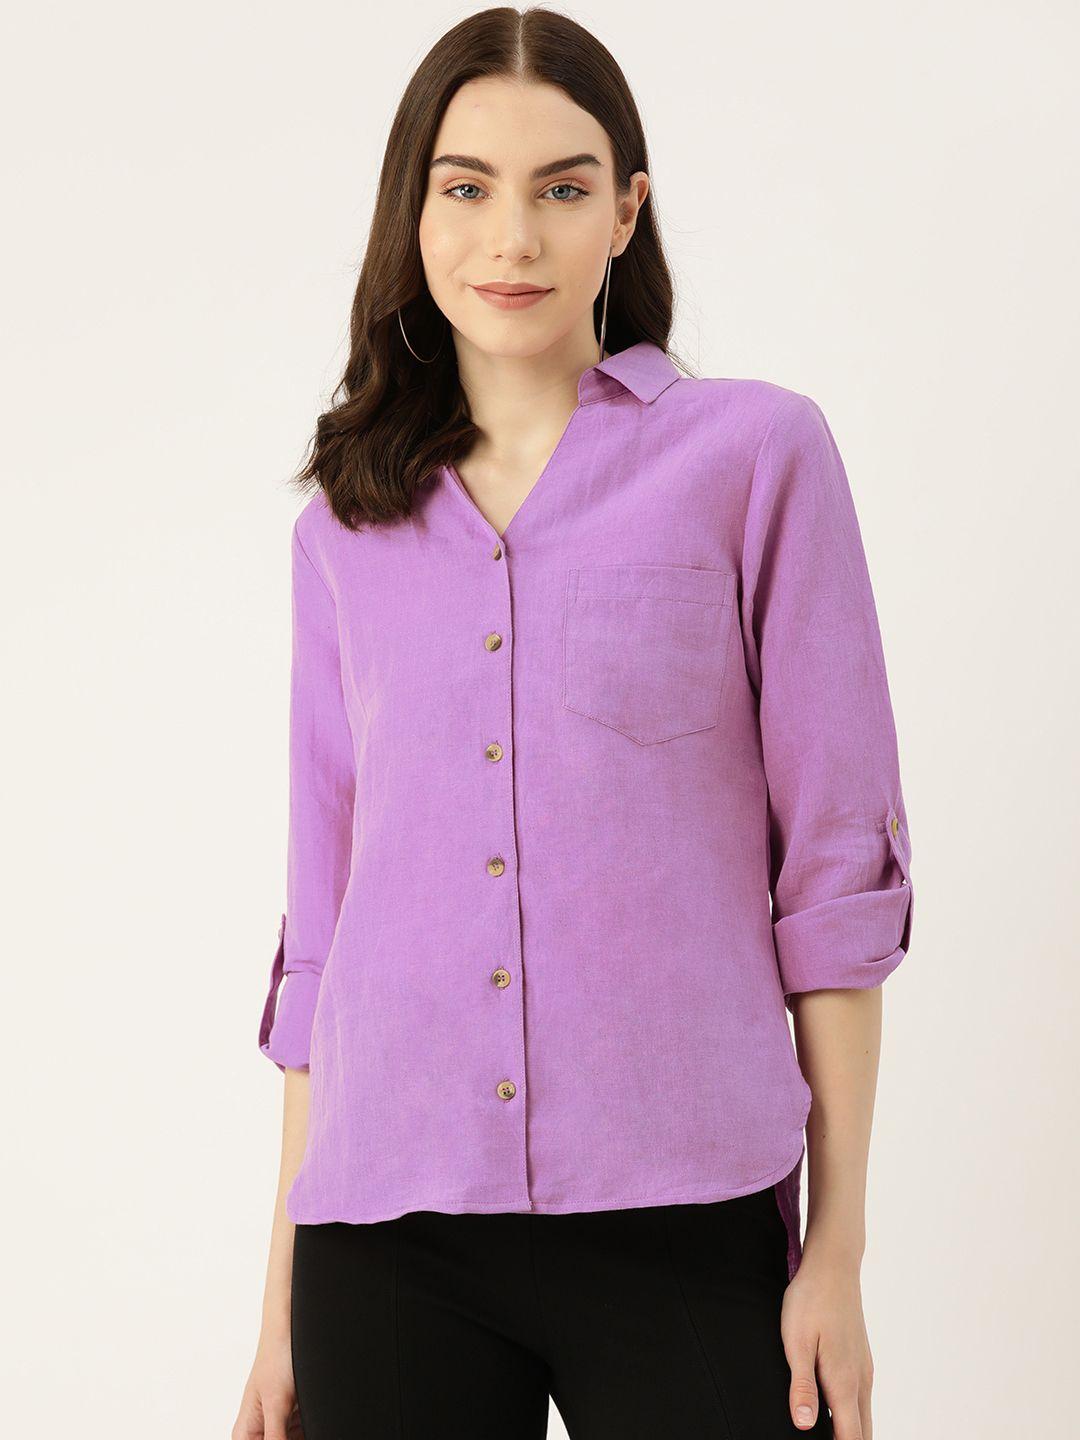 label regalia women solid opaque linen blend casual shirt